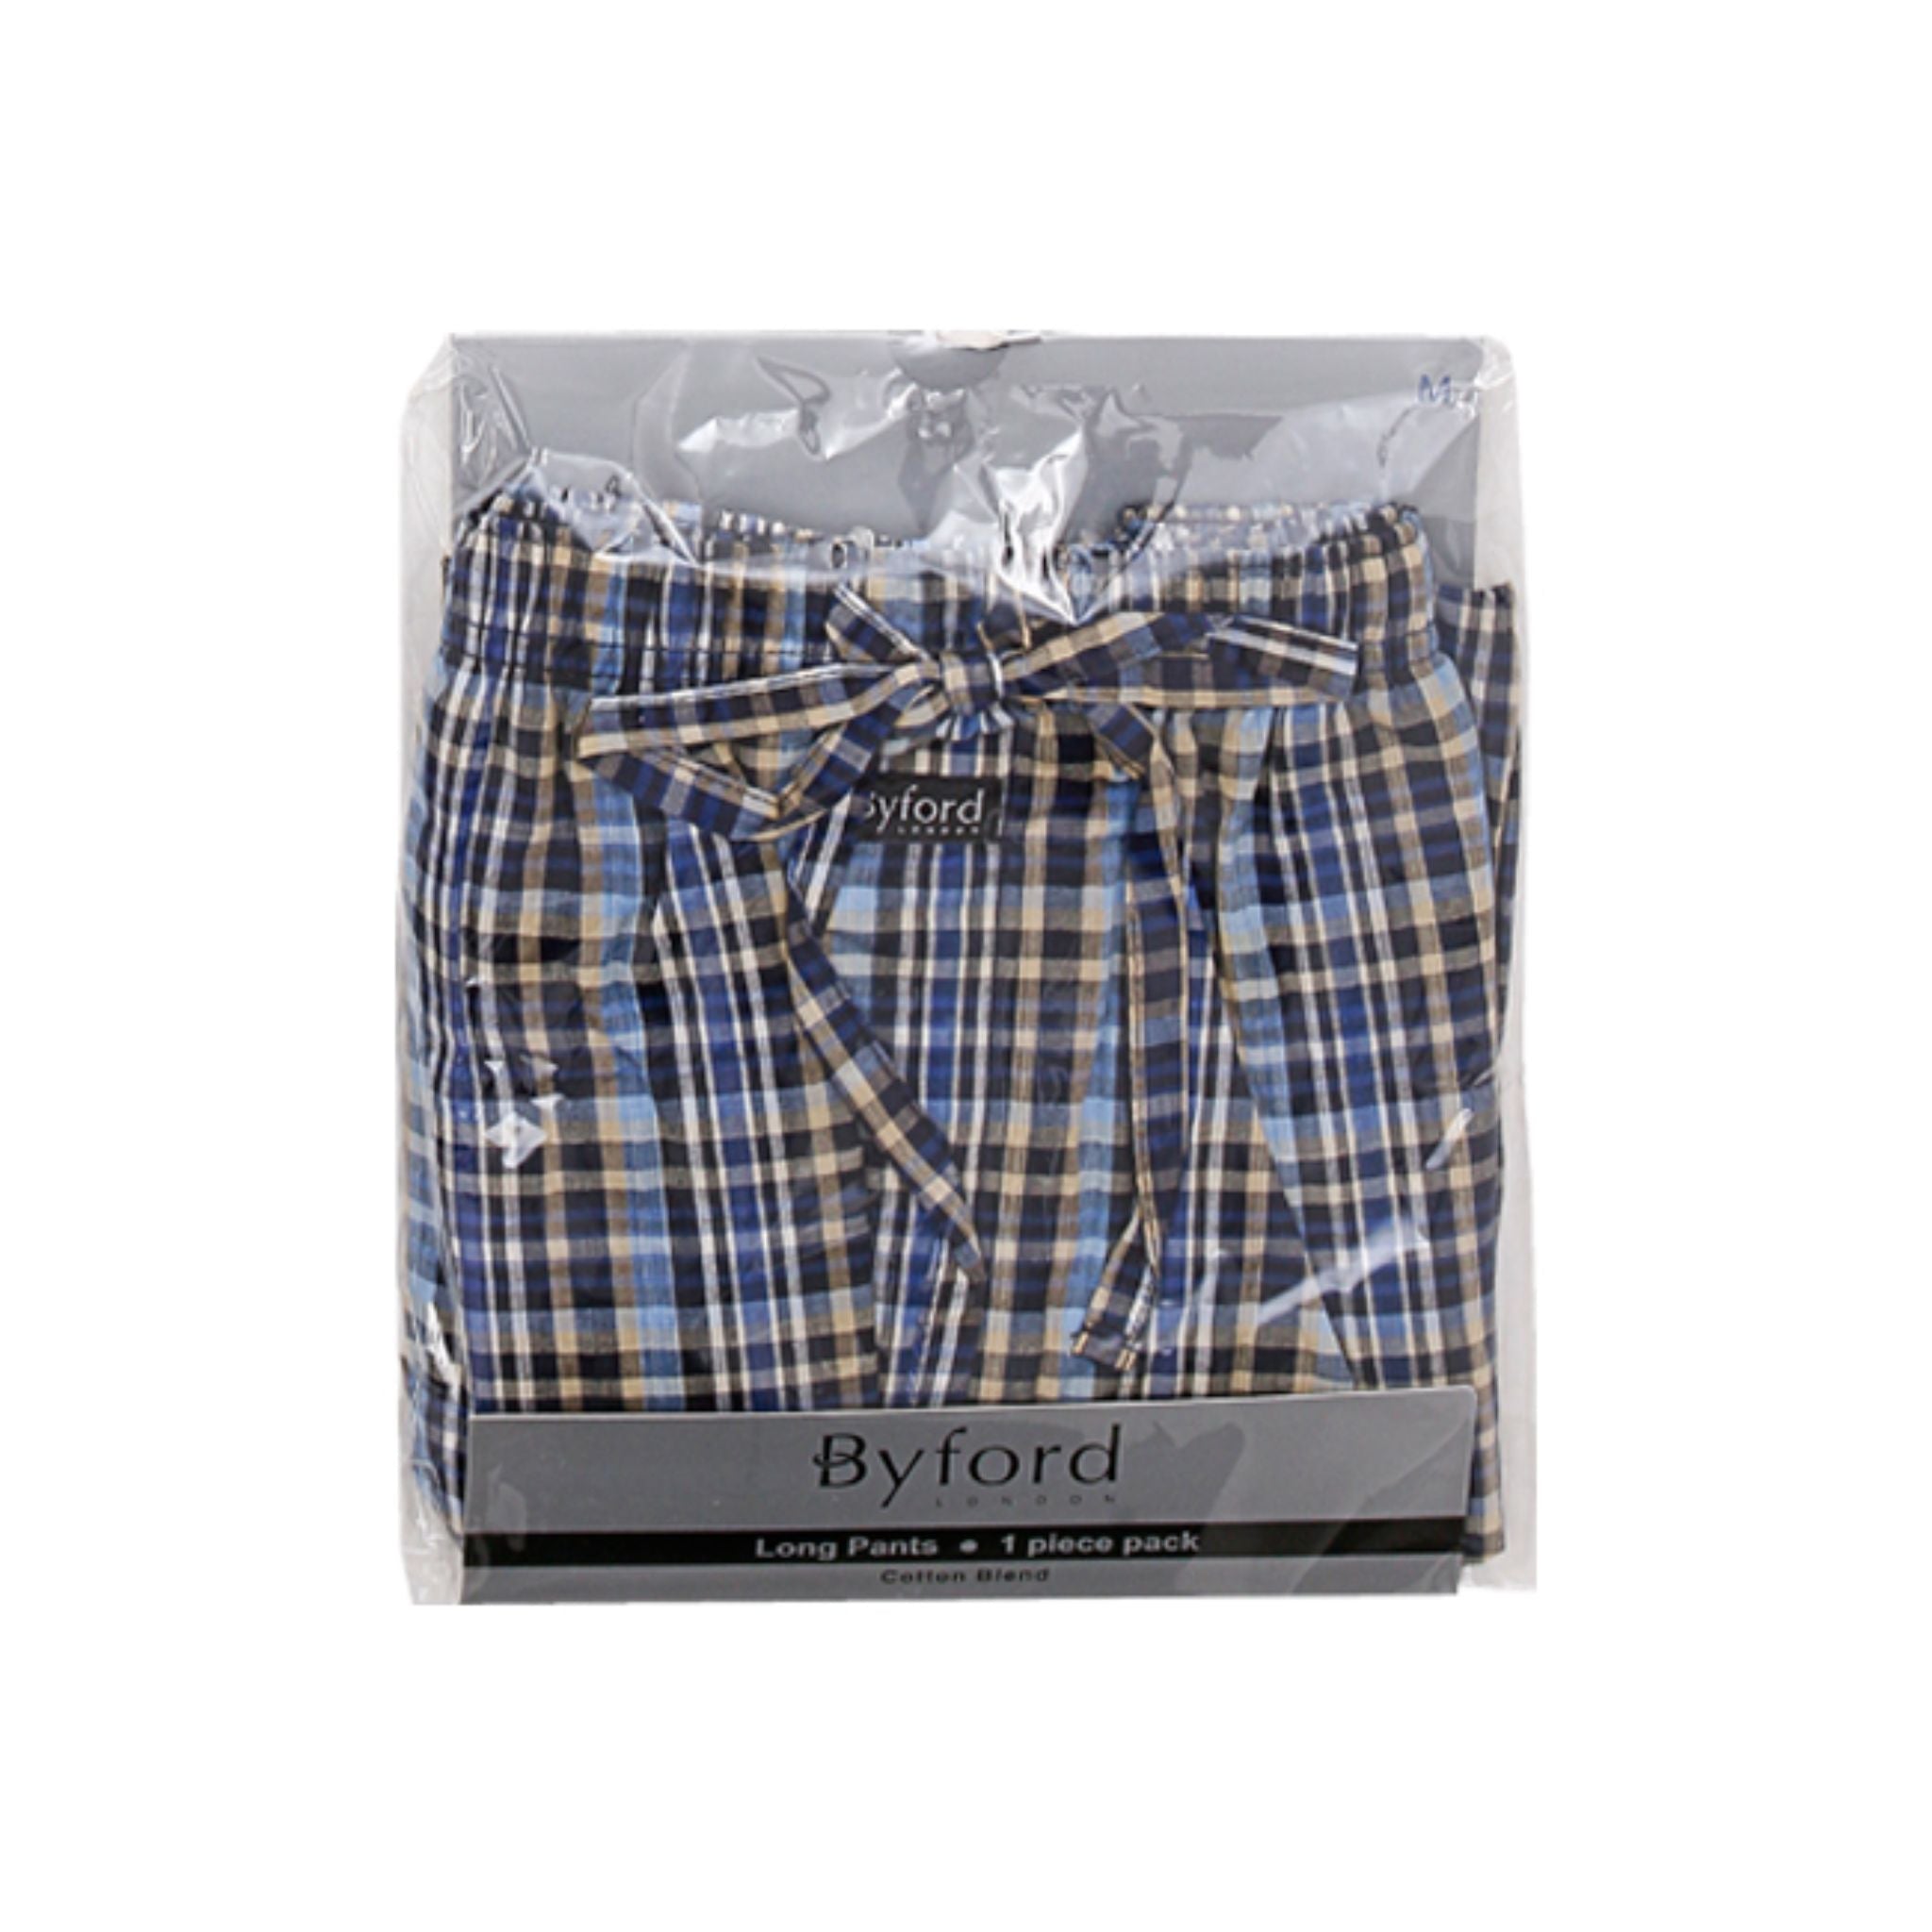 Byford by Pantaloons Medium Grey Slim Fit Trousers